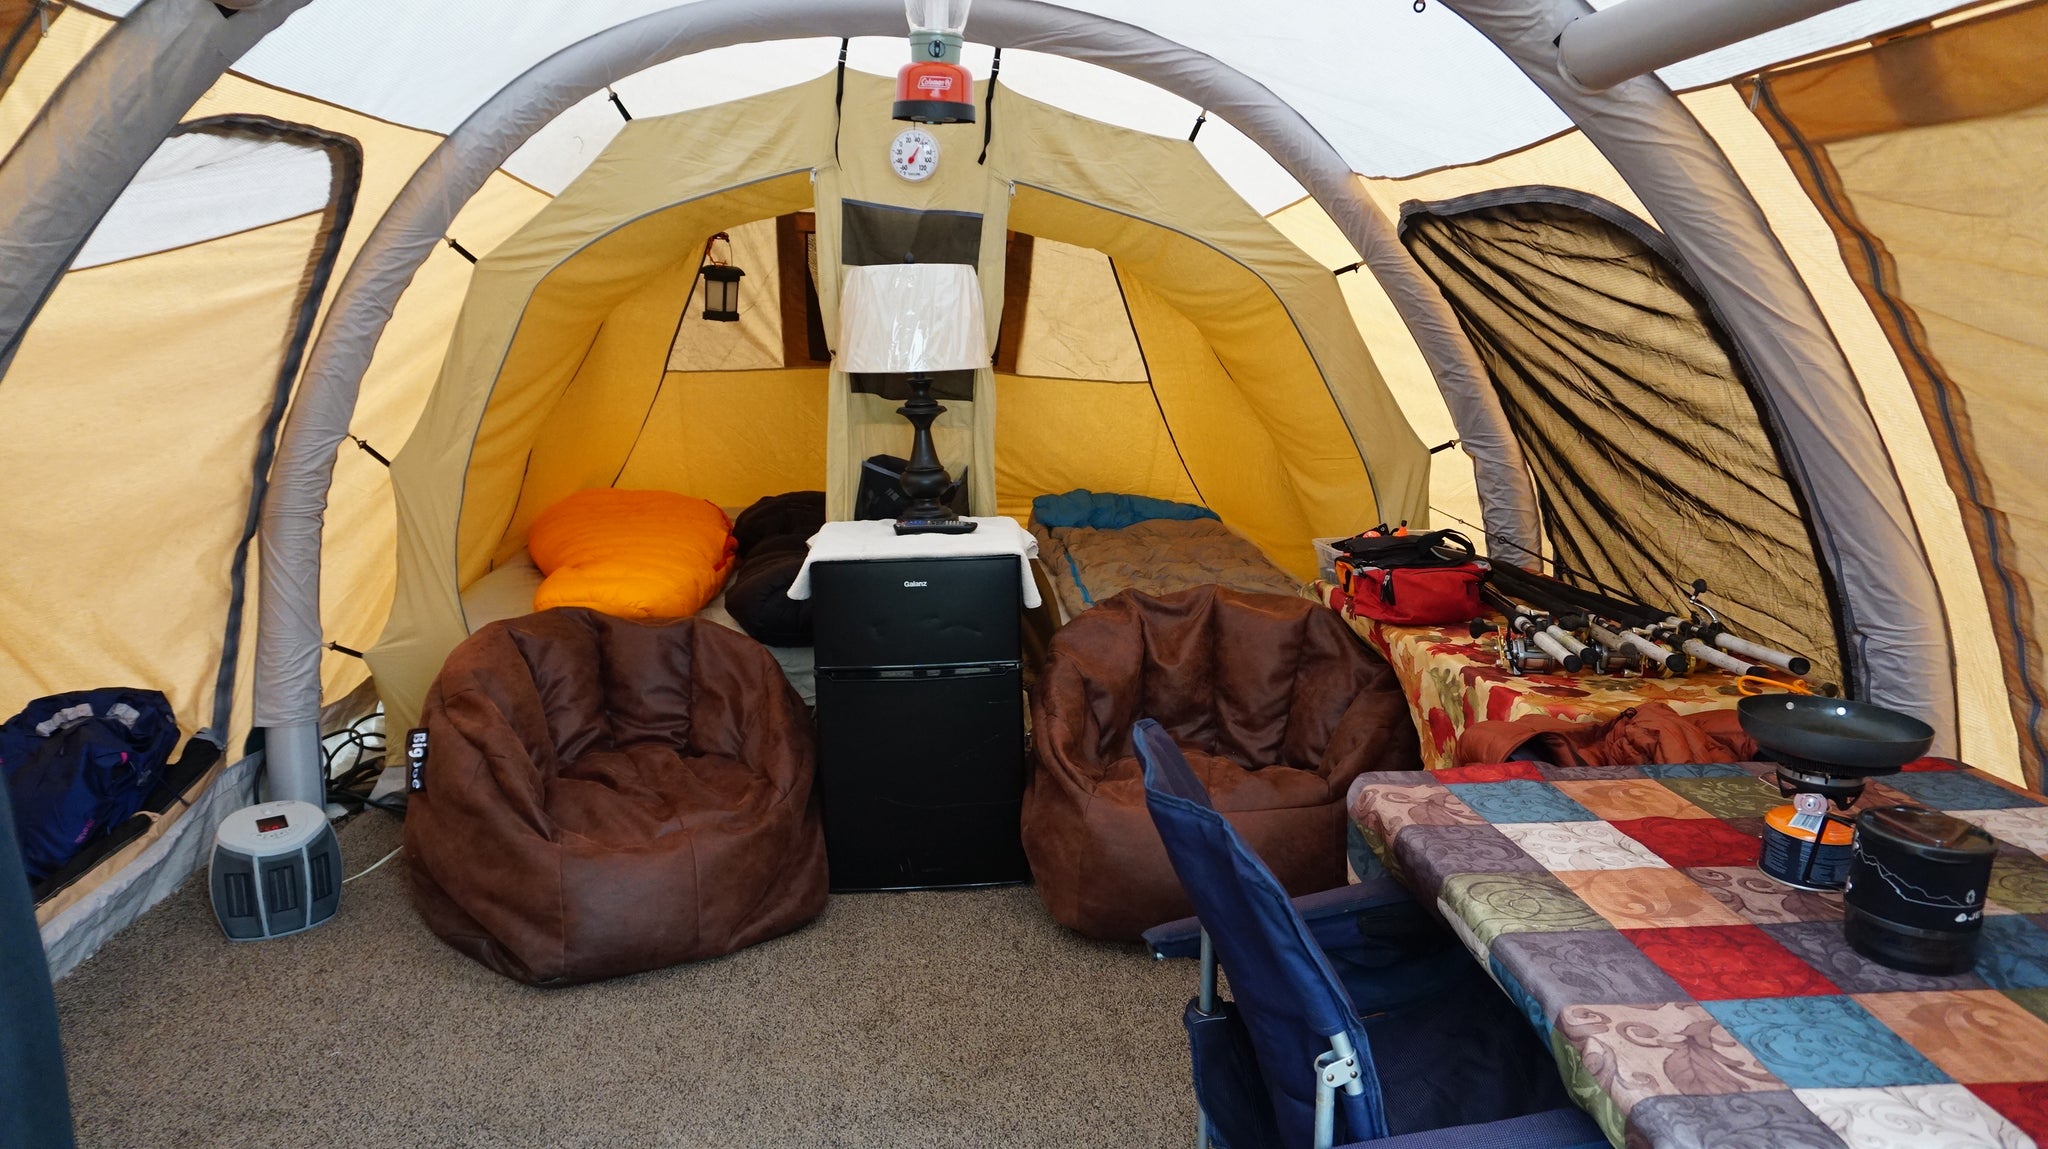 BOBCAT 500 Premium Family Camping Tent